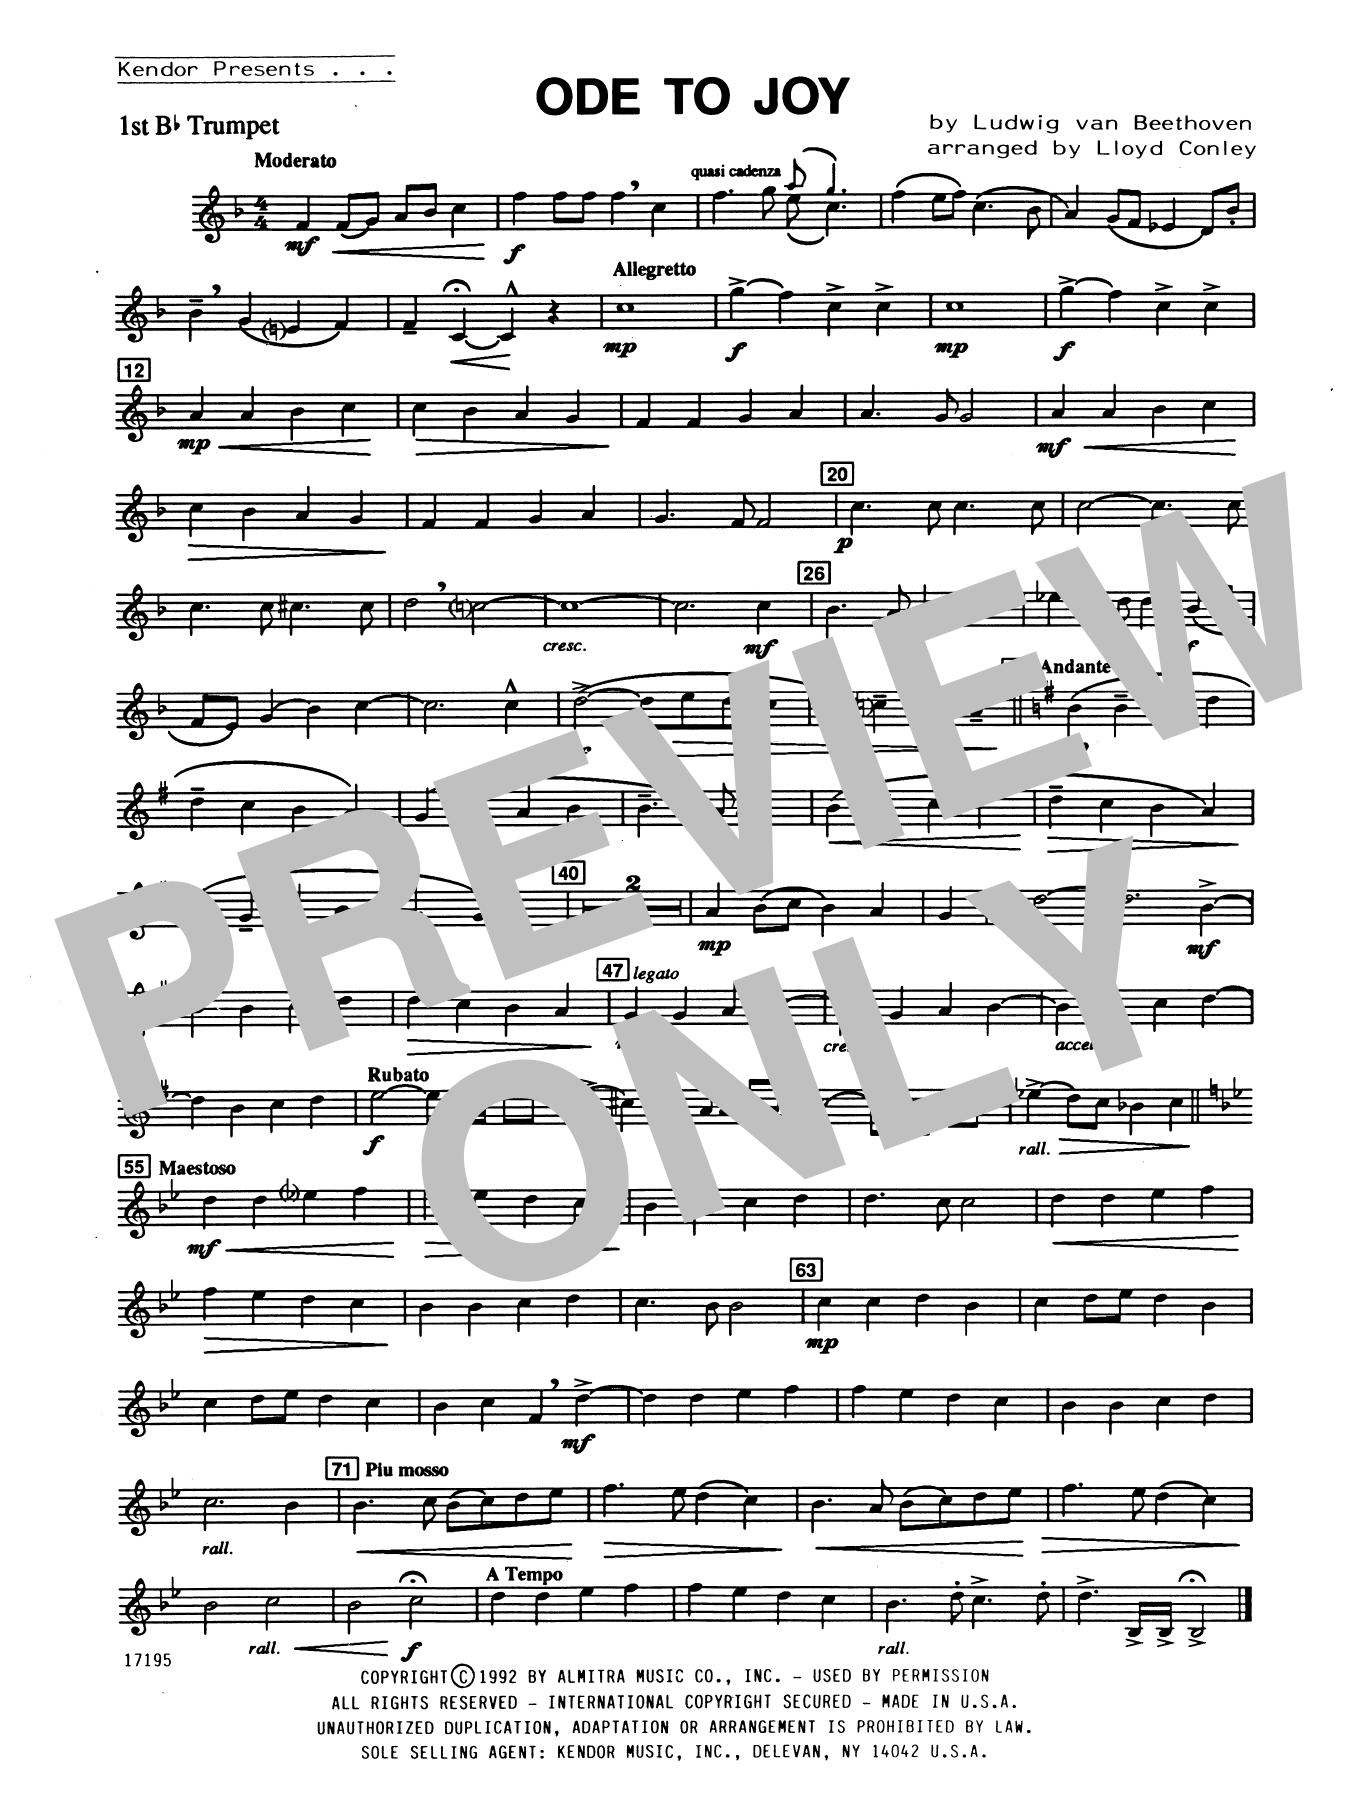 Download Lloyd Conley Ode To Joy - 1st Bb Trumpet Sheet Music